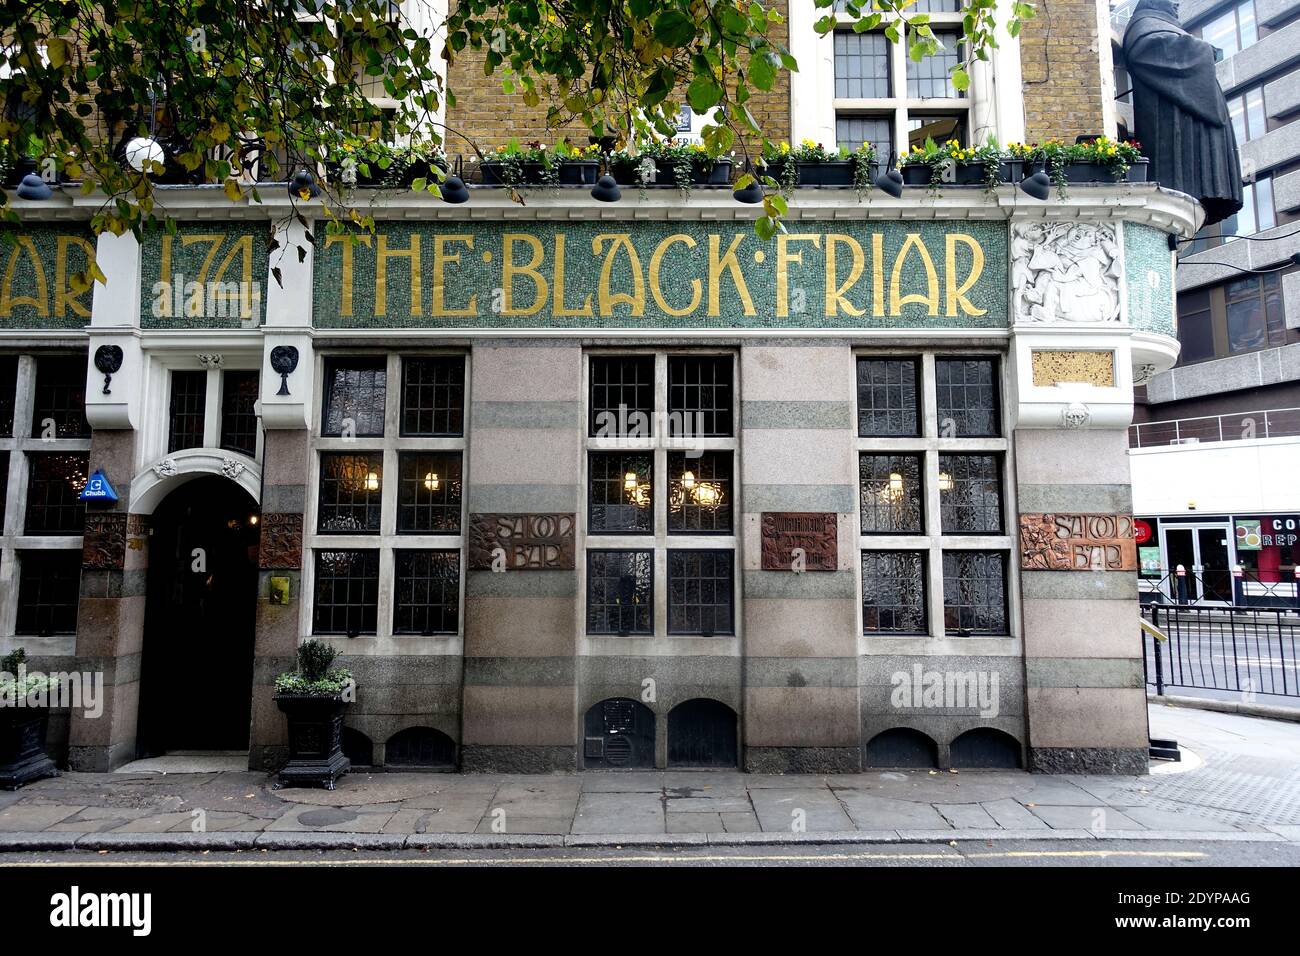 The Black Friar, London, England, UK. Stock Photo